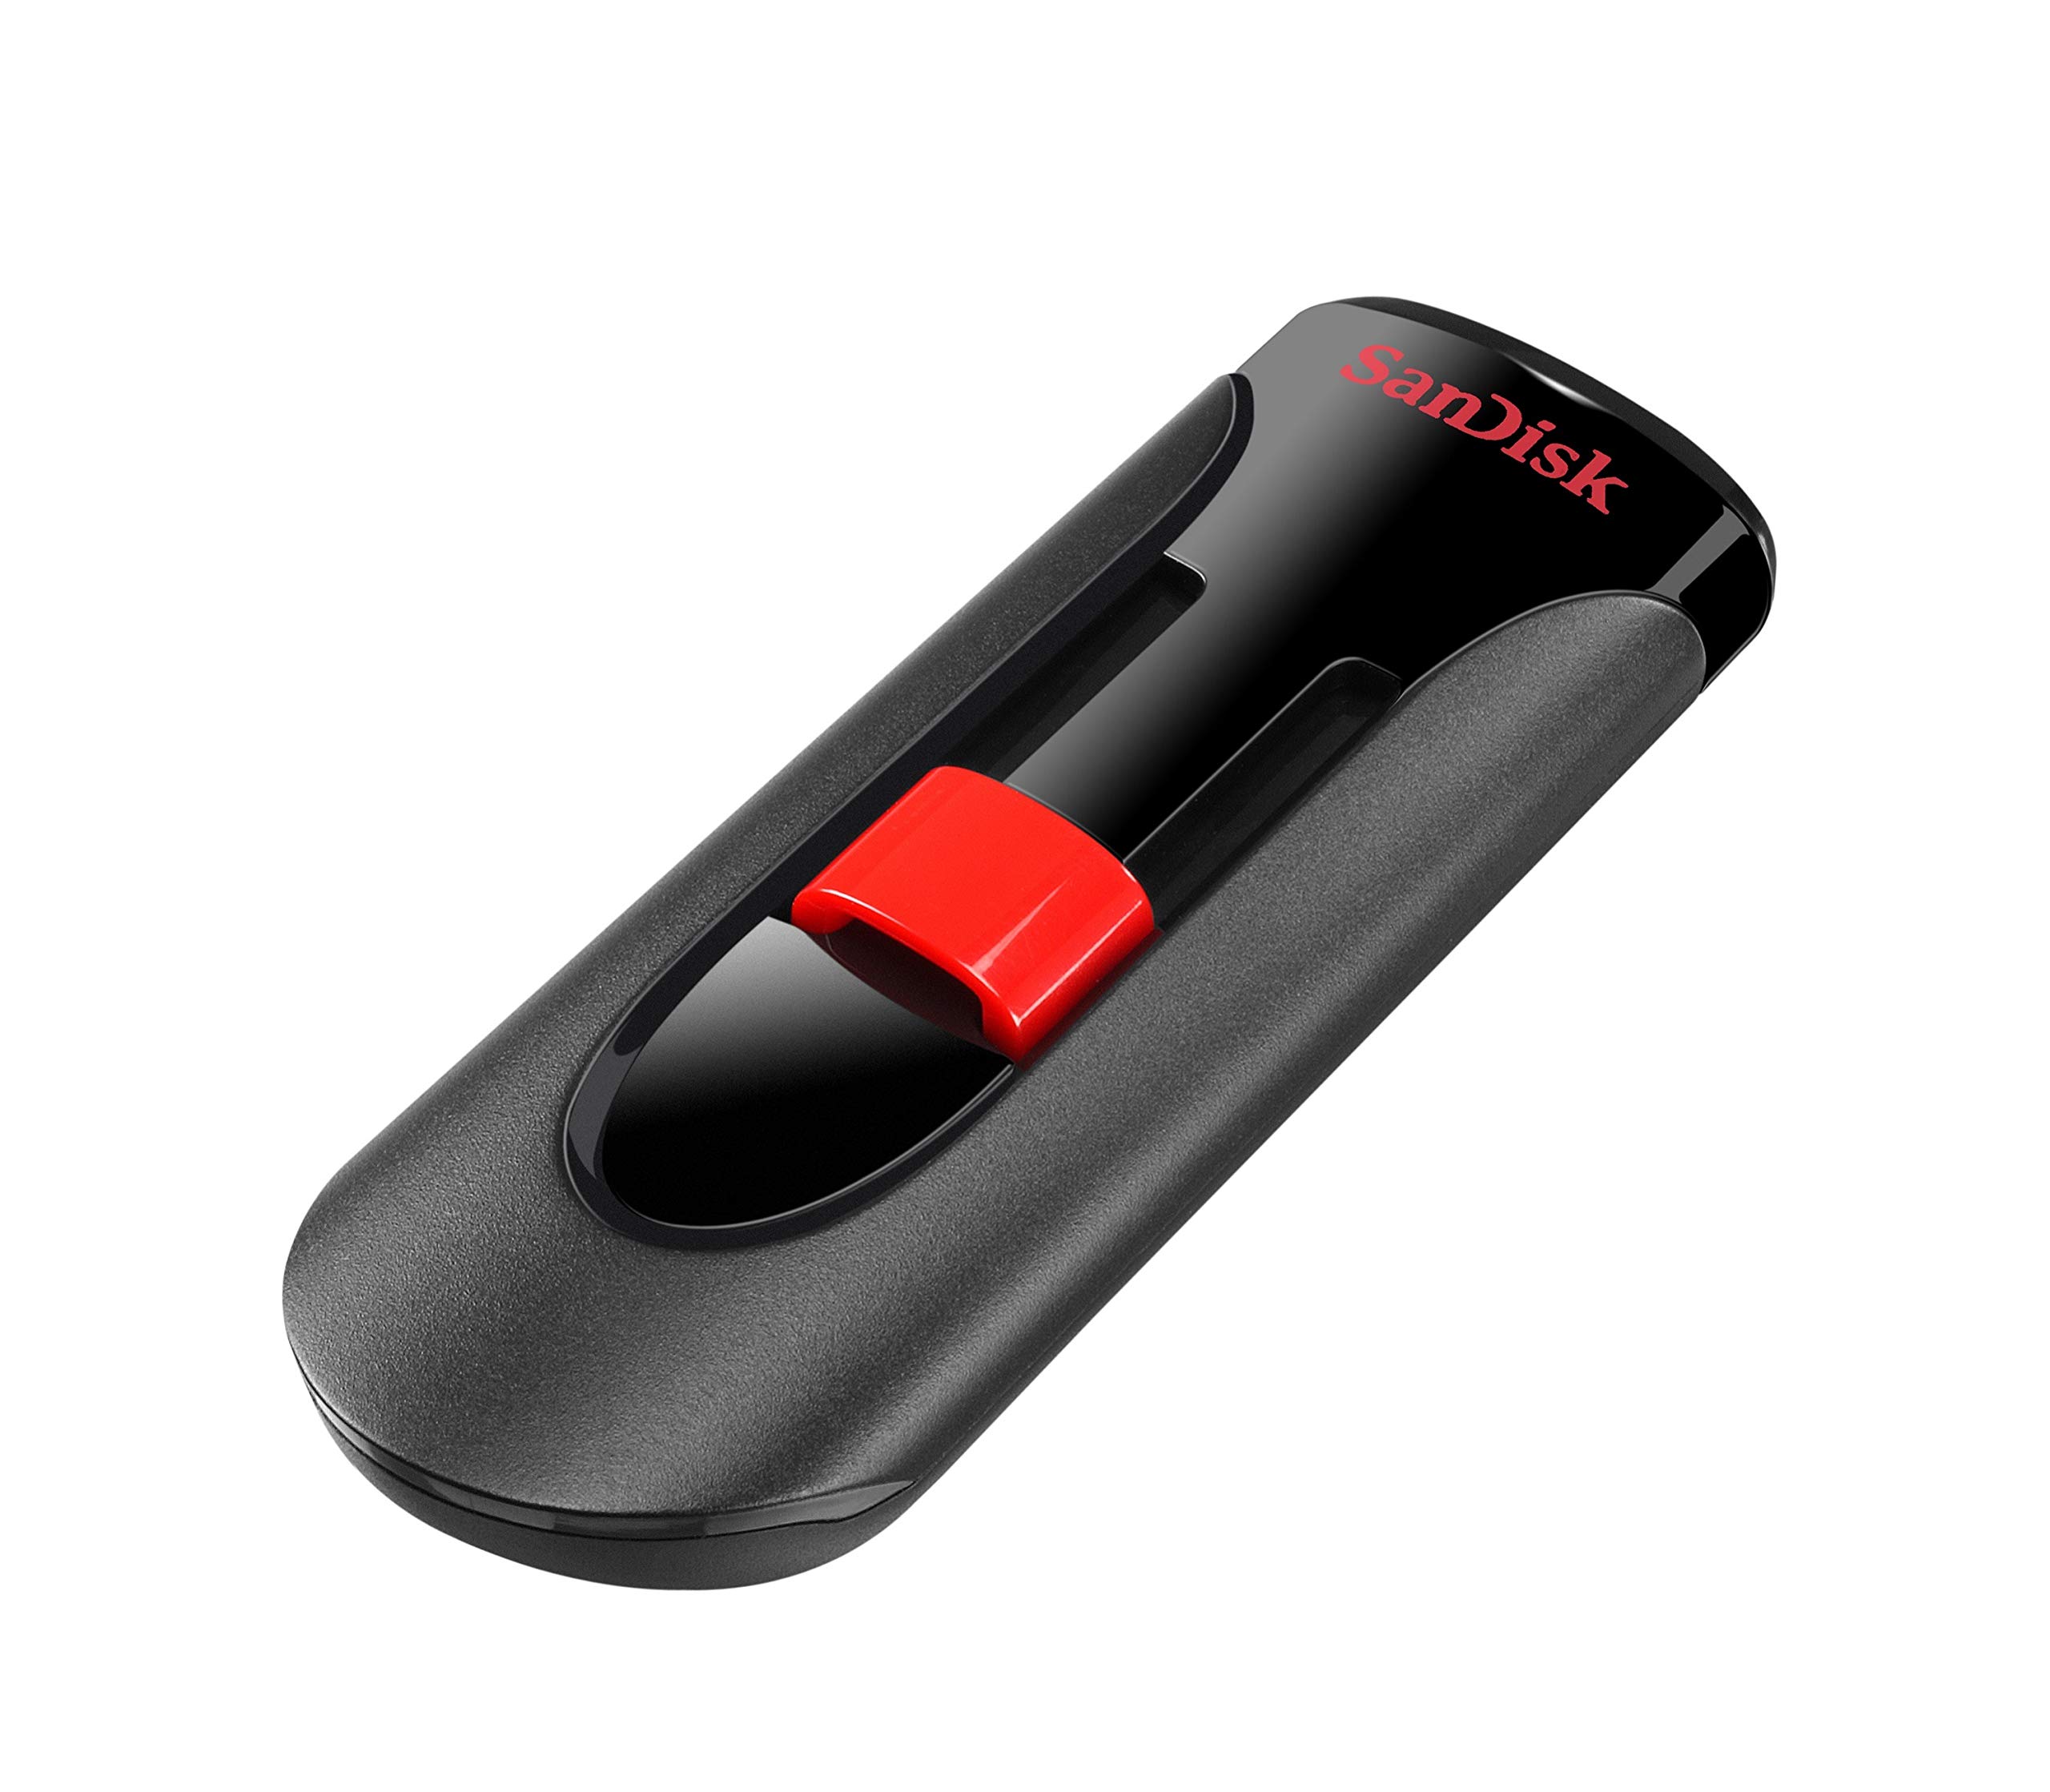 SanDisk 32GB Cruzer Glide USB 2.0 Flash Drive - SDCZ60-032G-B35, Red